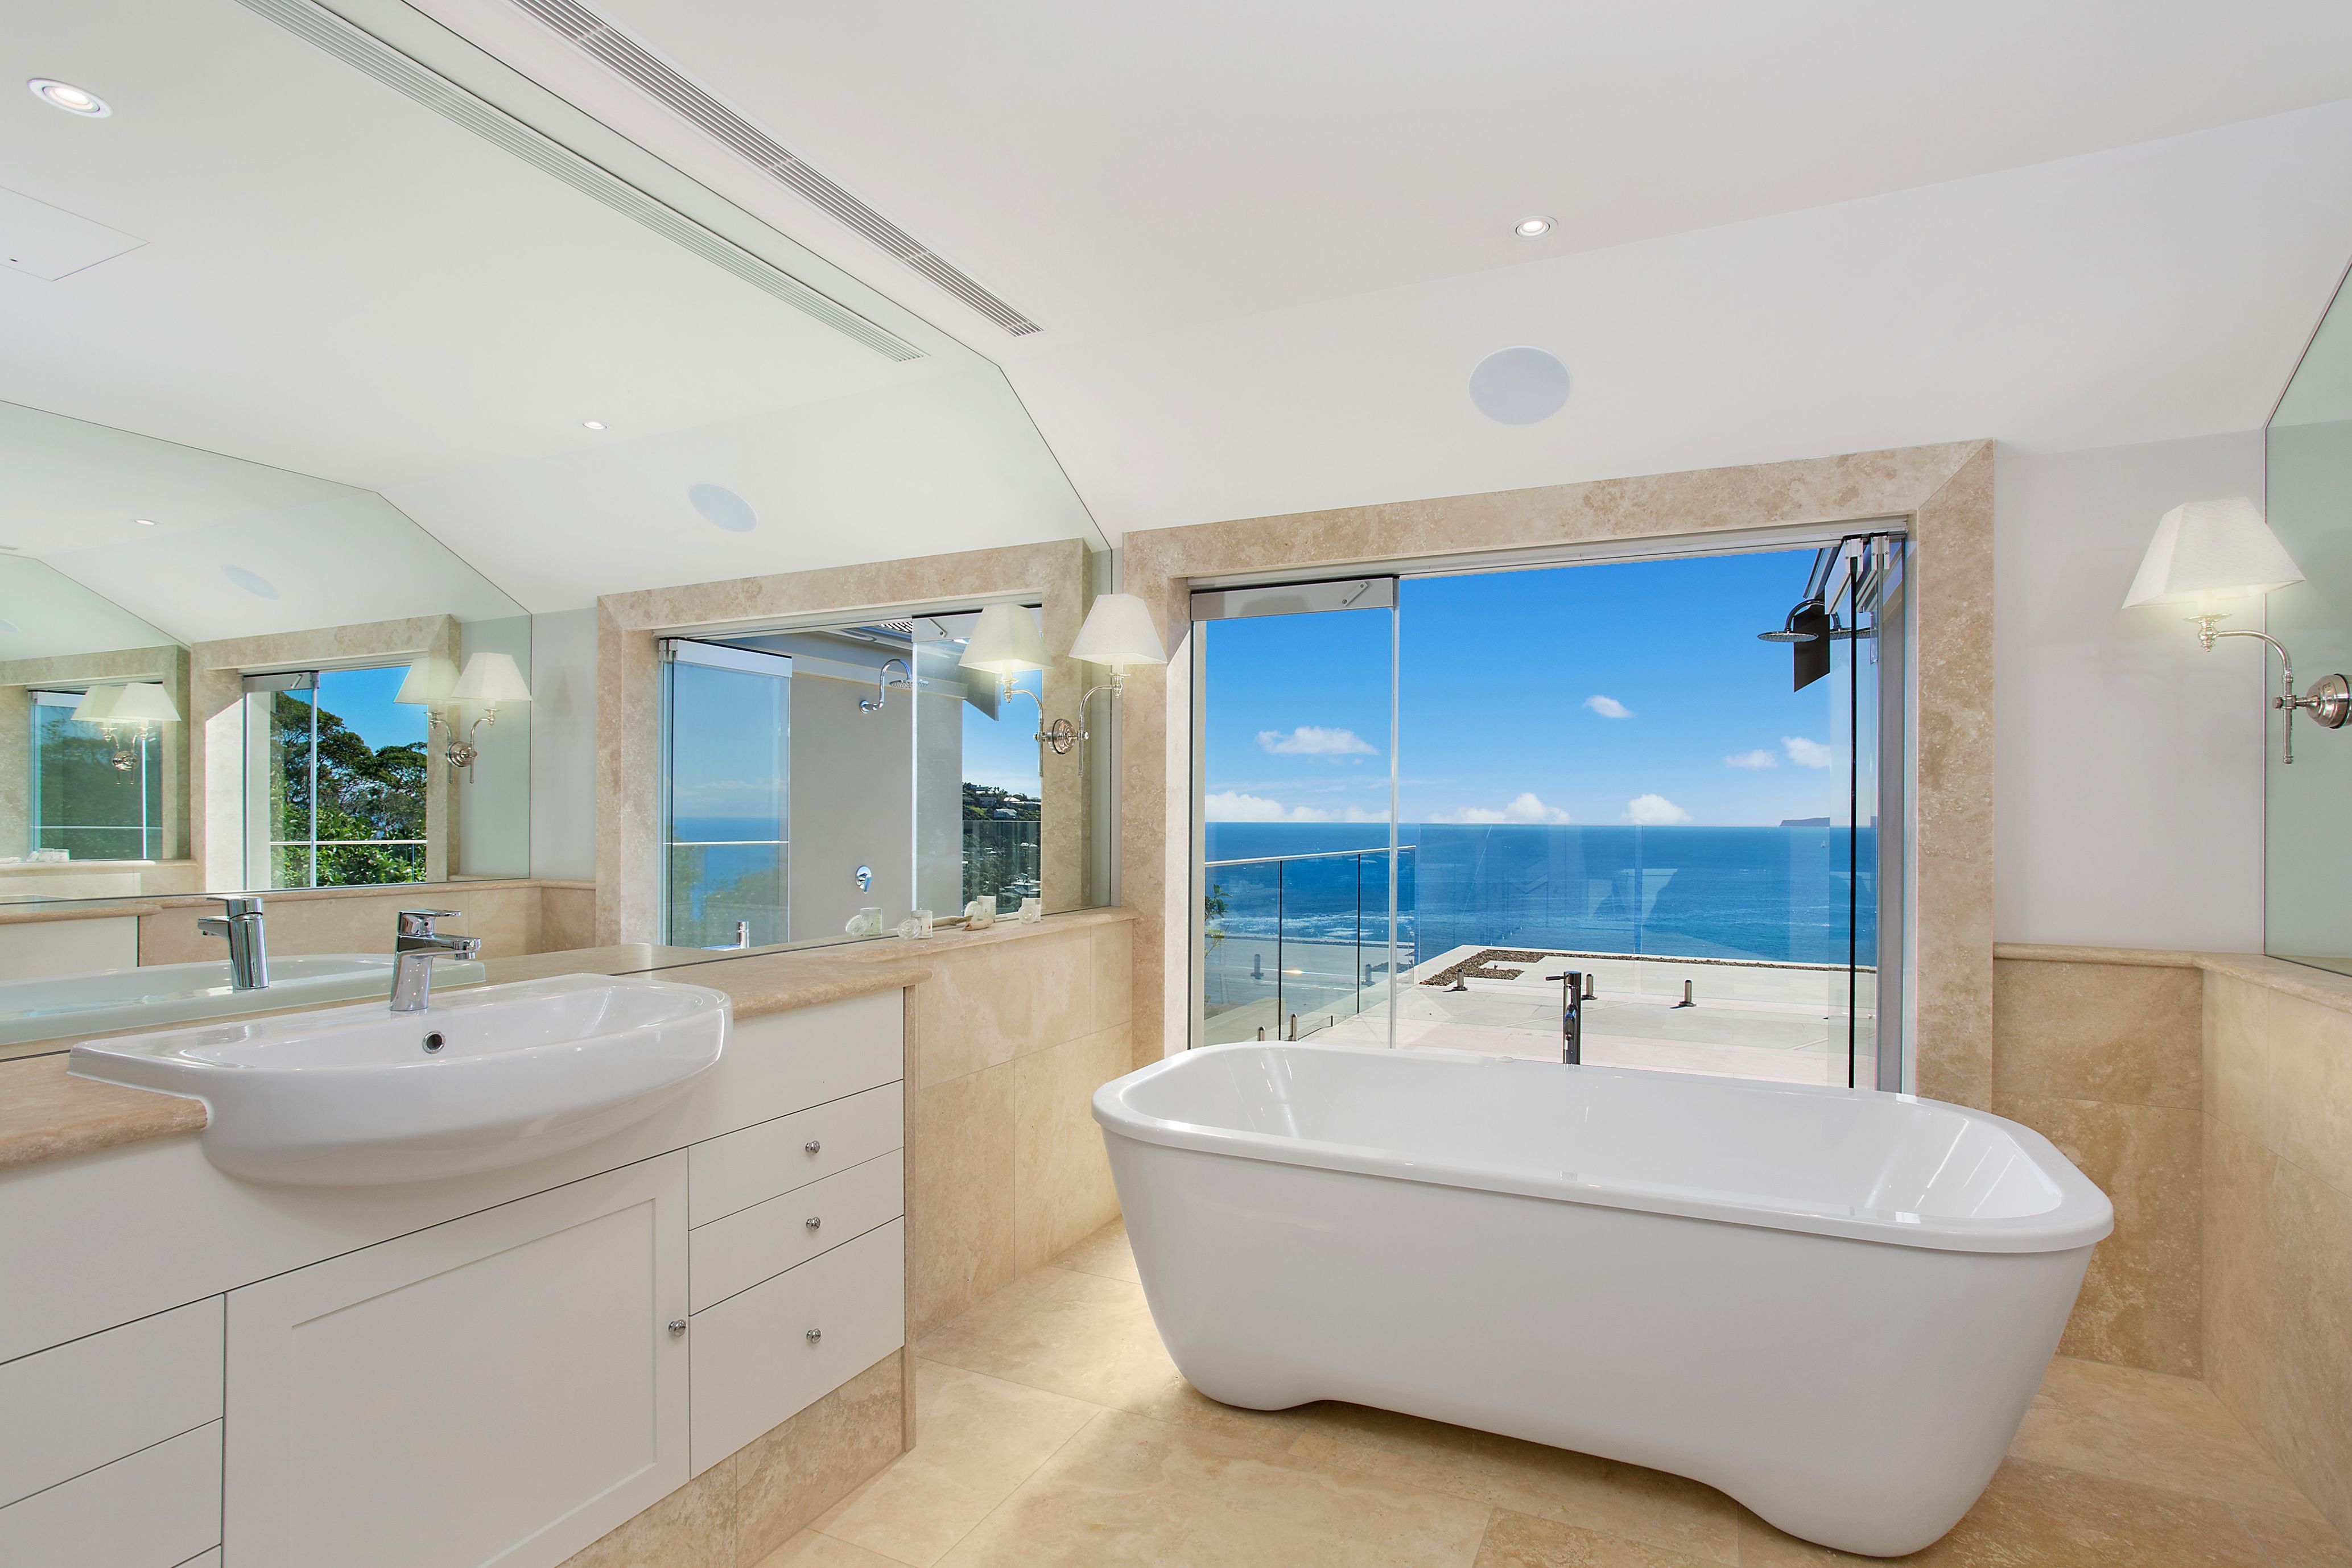 Mirrors Beach Themed Bathroom (View 8 of 10)